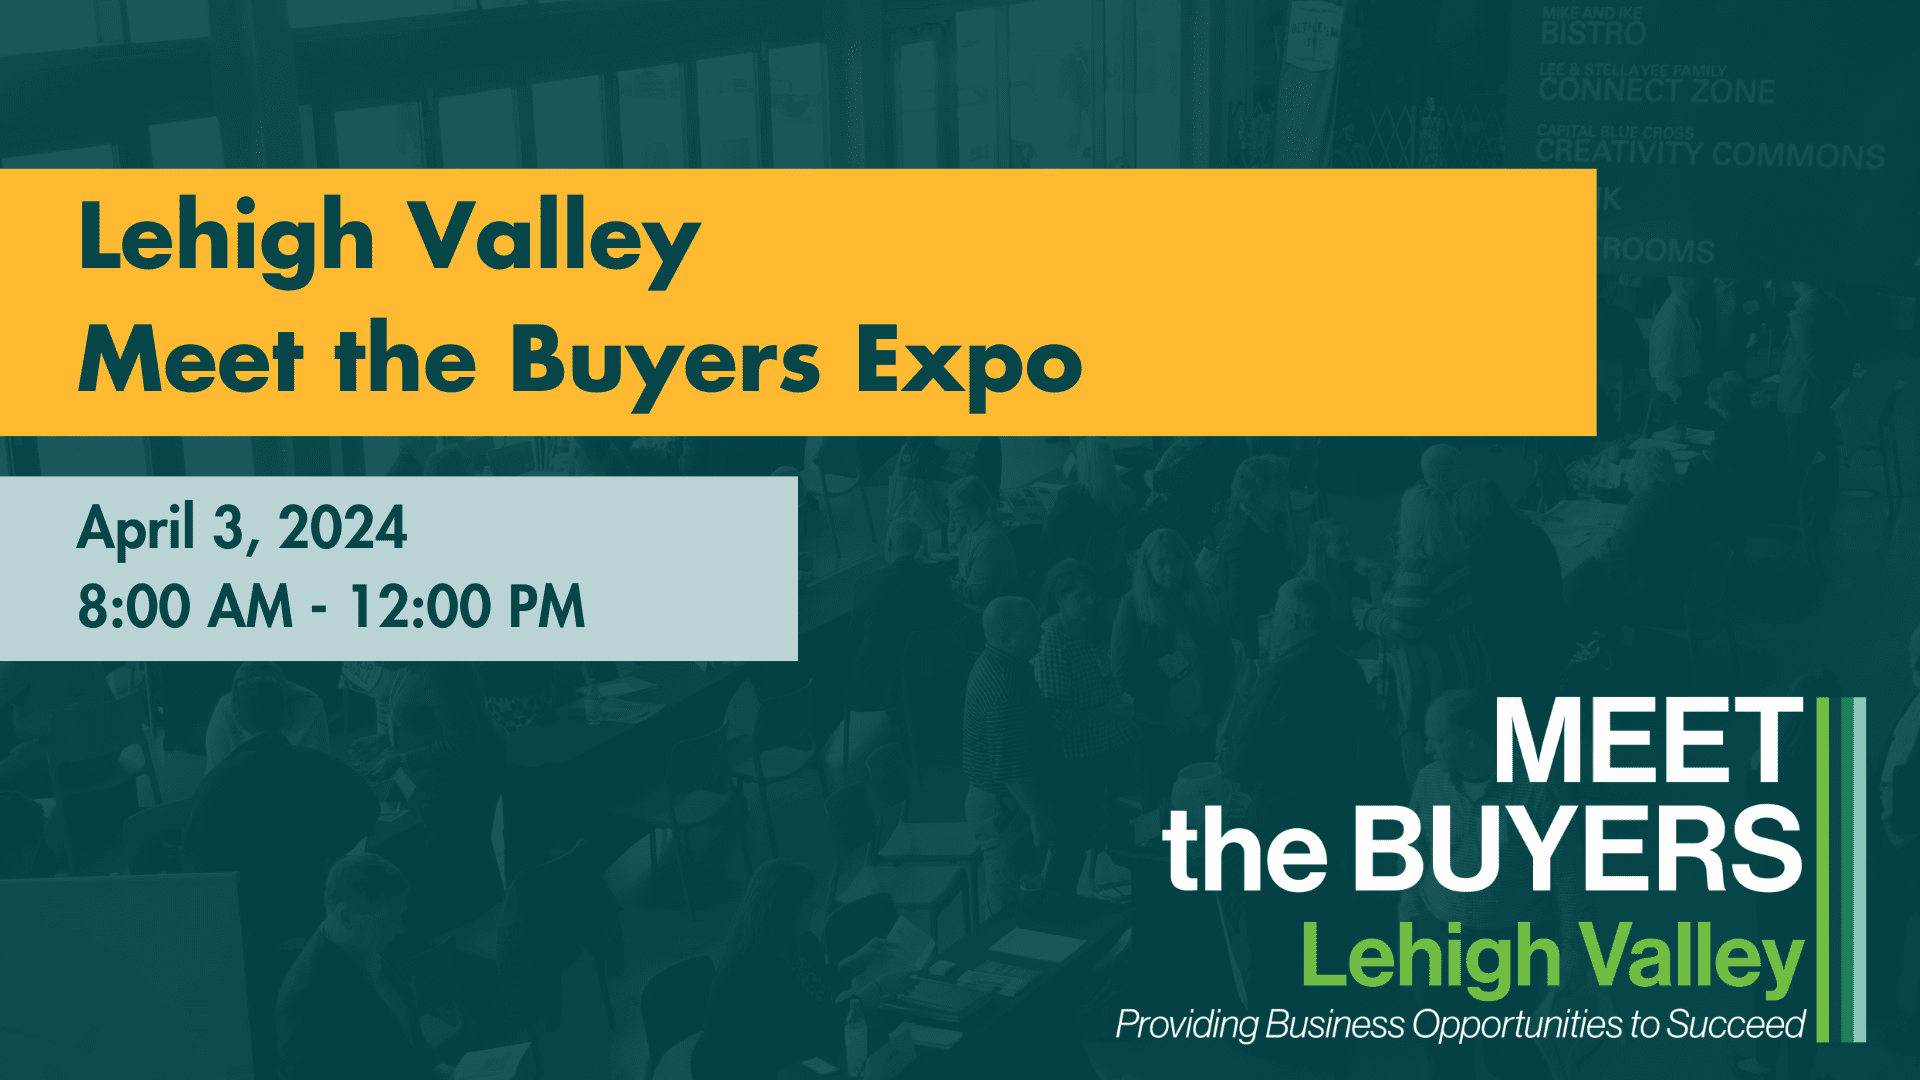 Lehigh Valley Meet the Buyers Expo